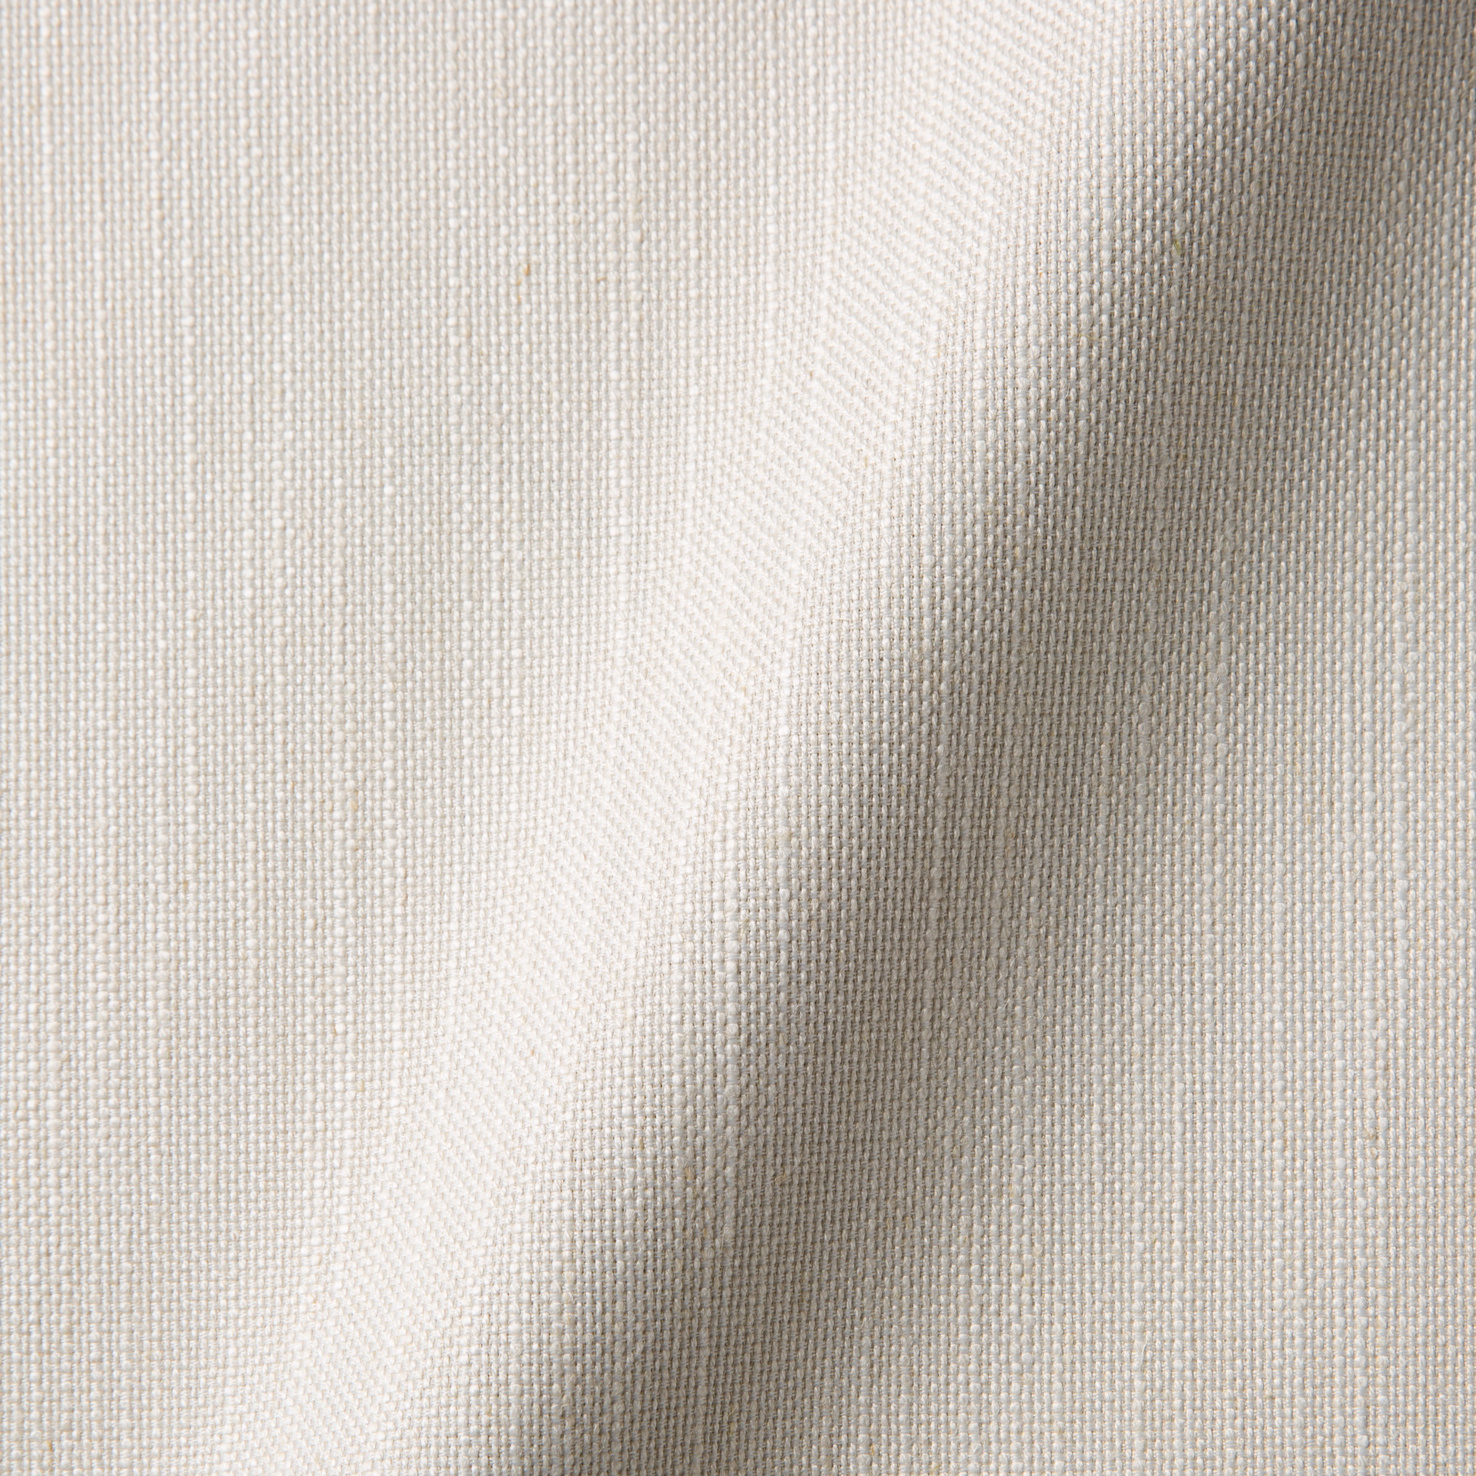 Fabric sample Macchedil Sottile Off White